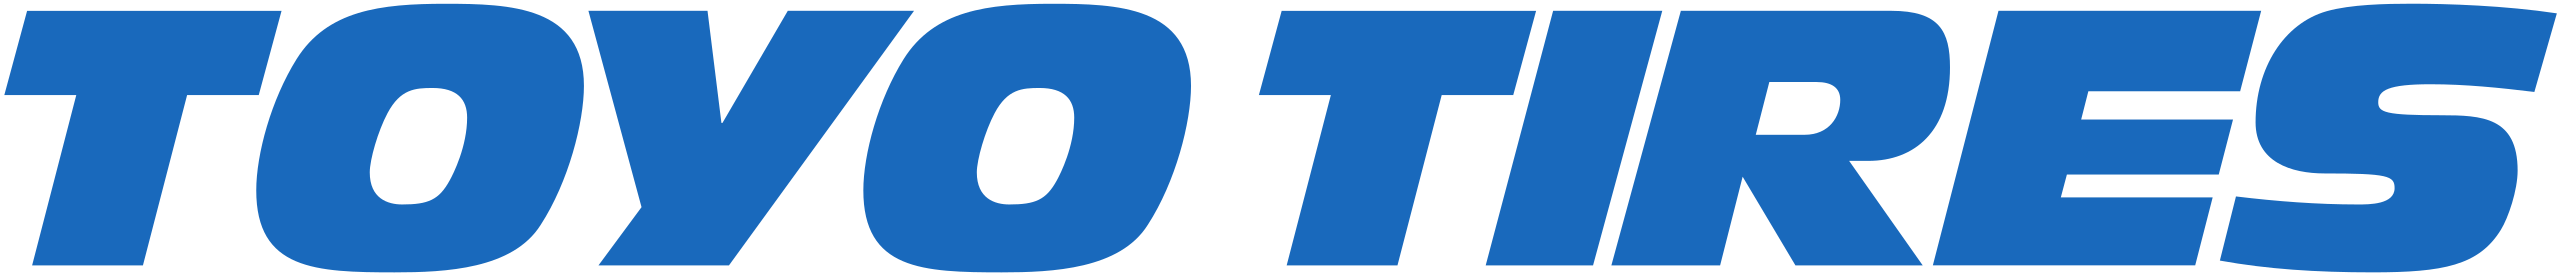 Toyo_Tire_logo.svg